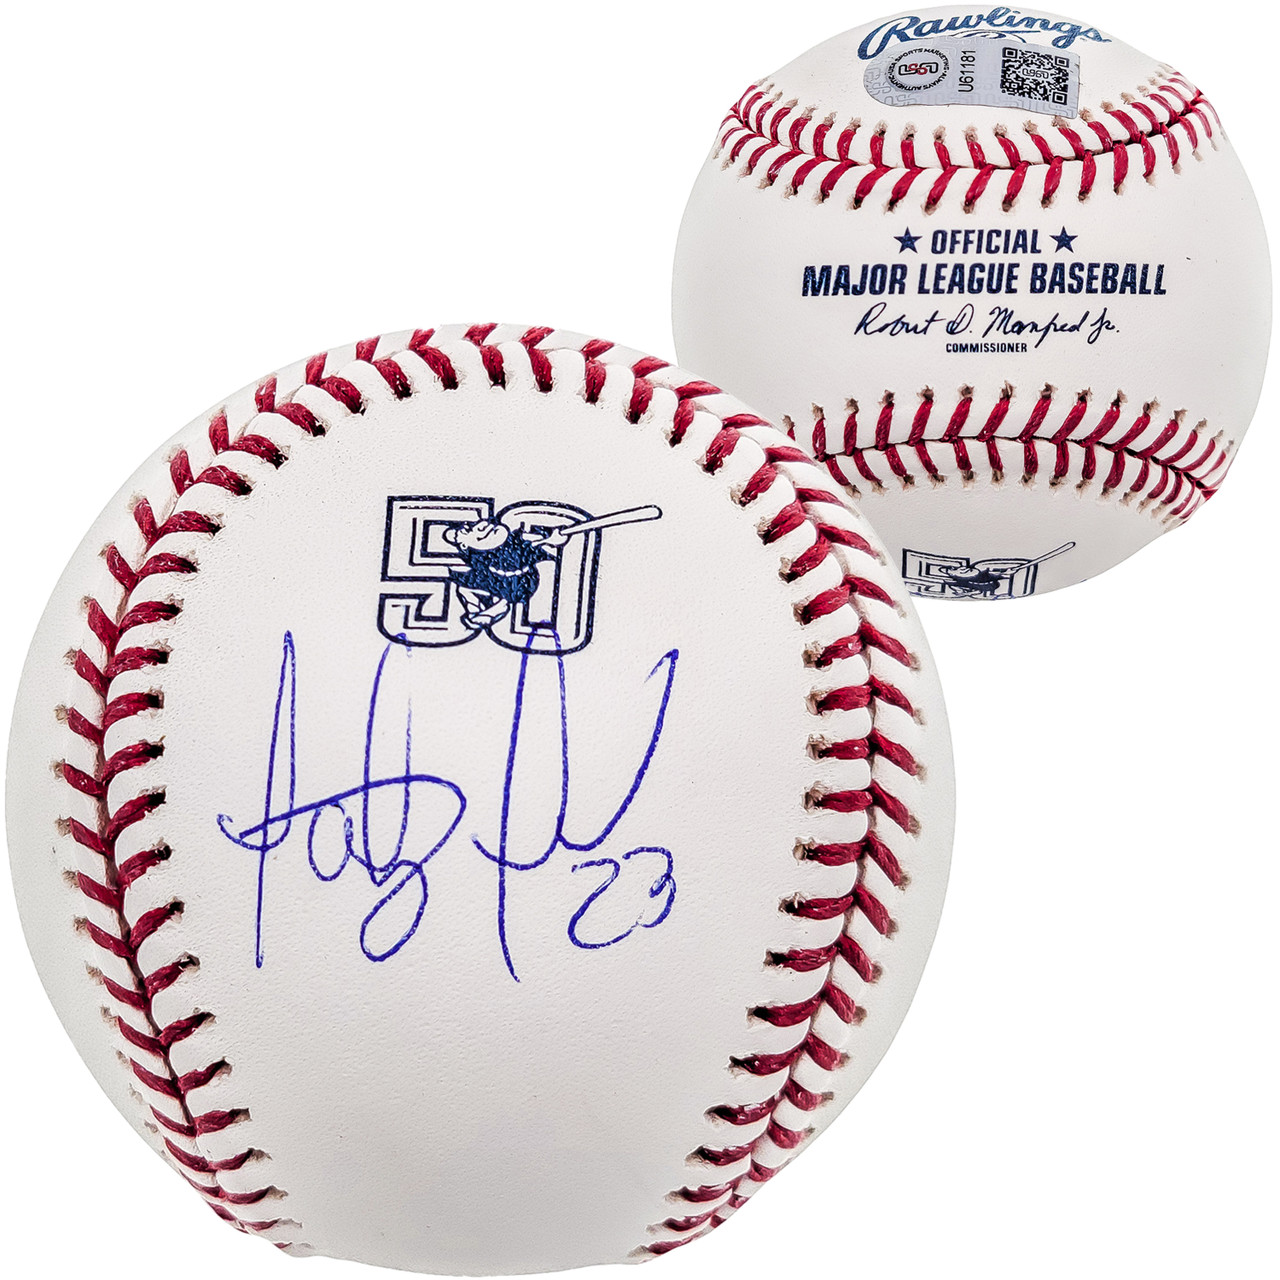 Fanatics Authentic Fernando Tatis Jr. San Diego Padres Autographed Baseball